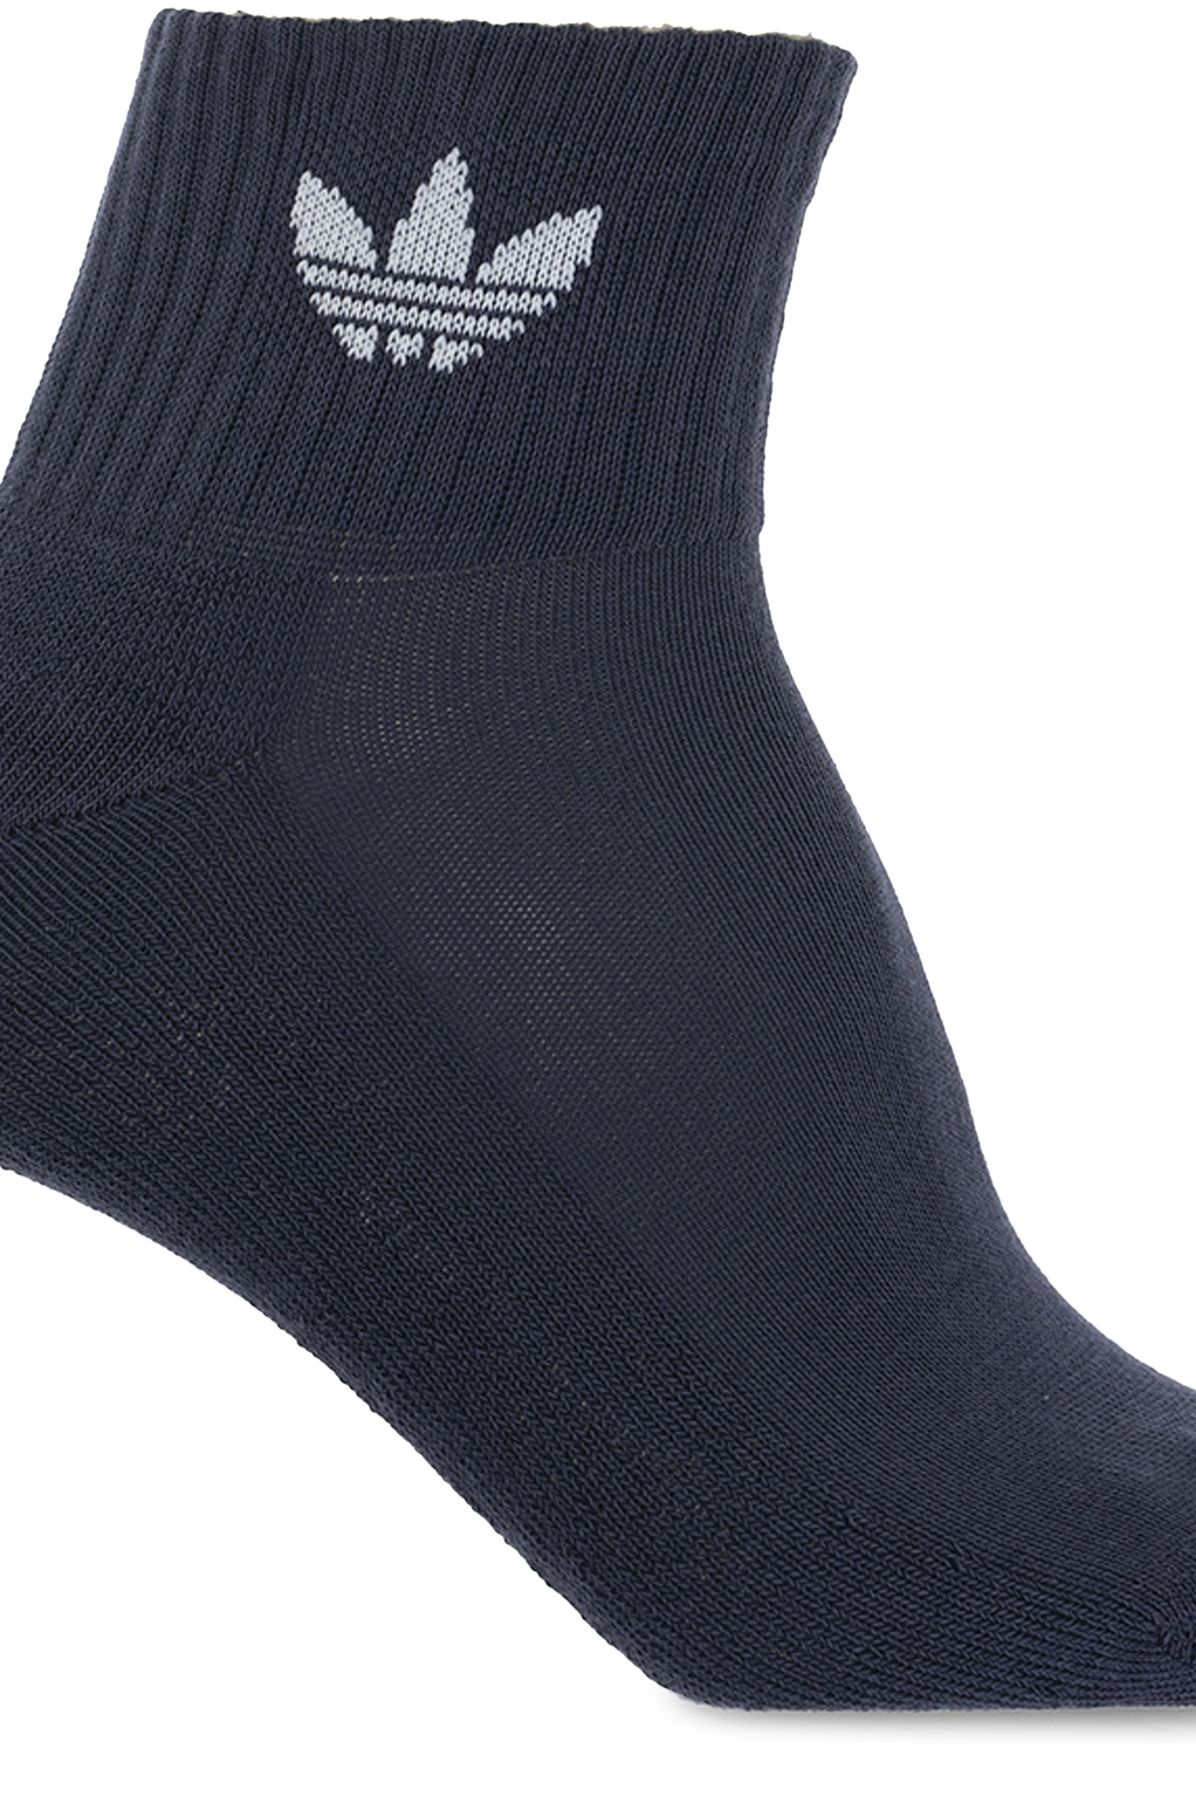 Adidas Originals Socks three-pack